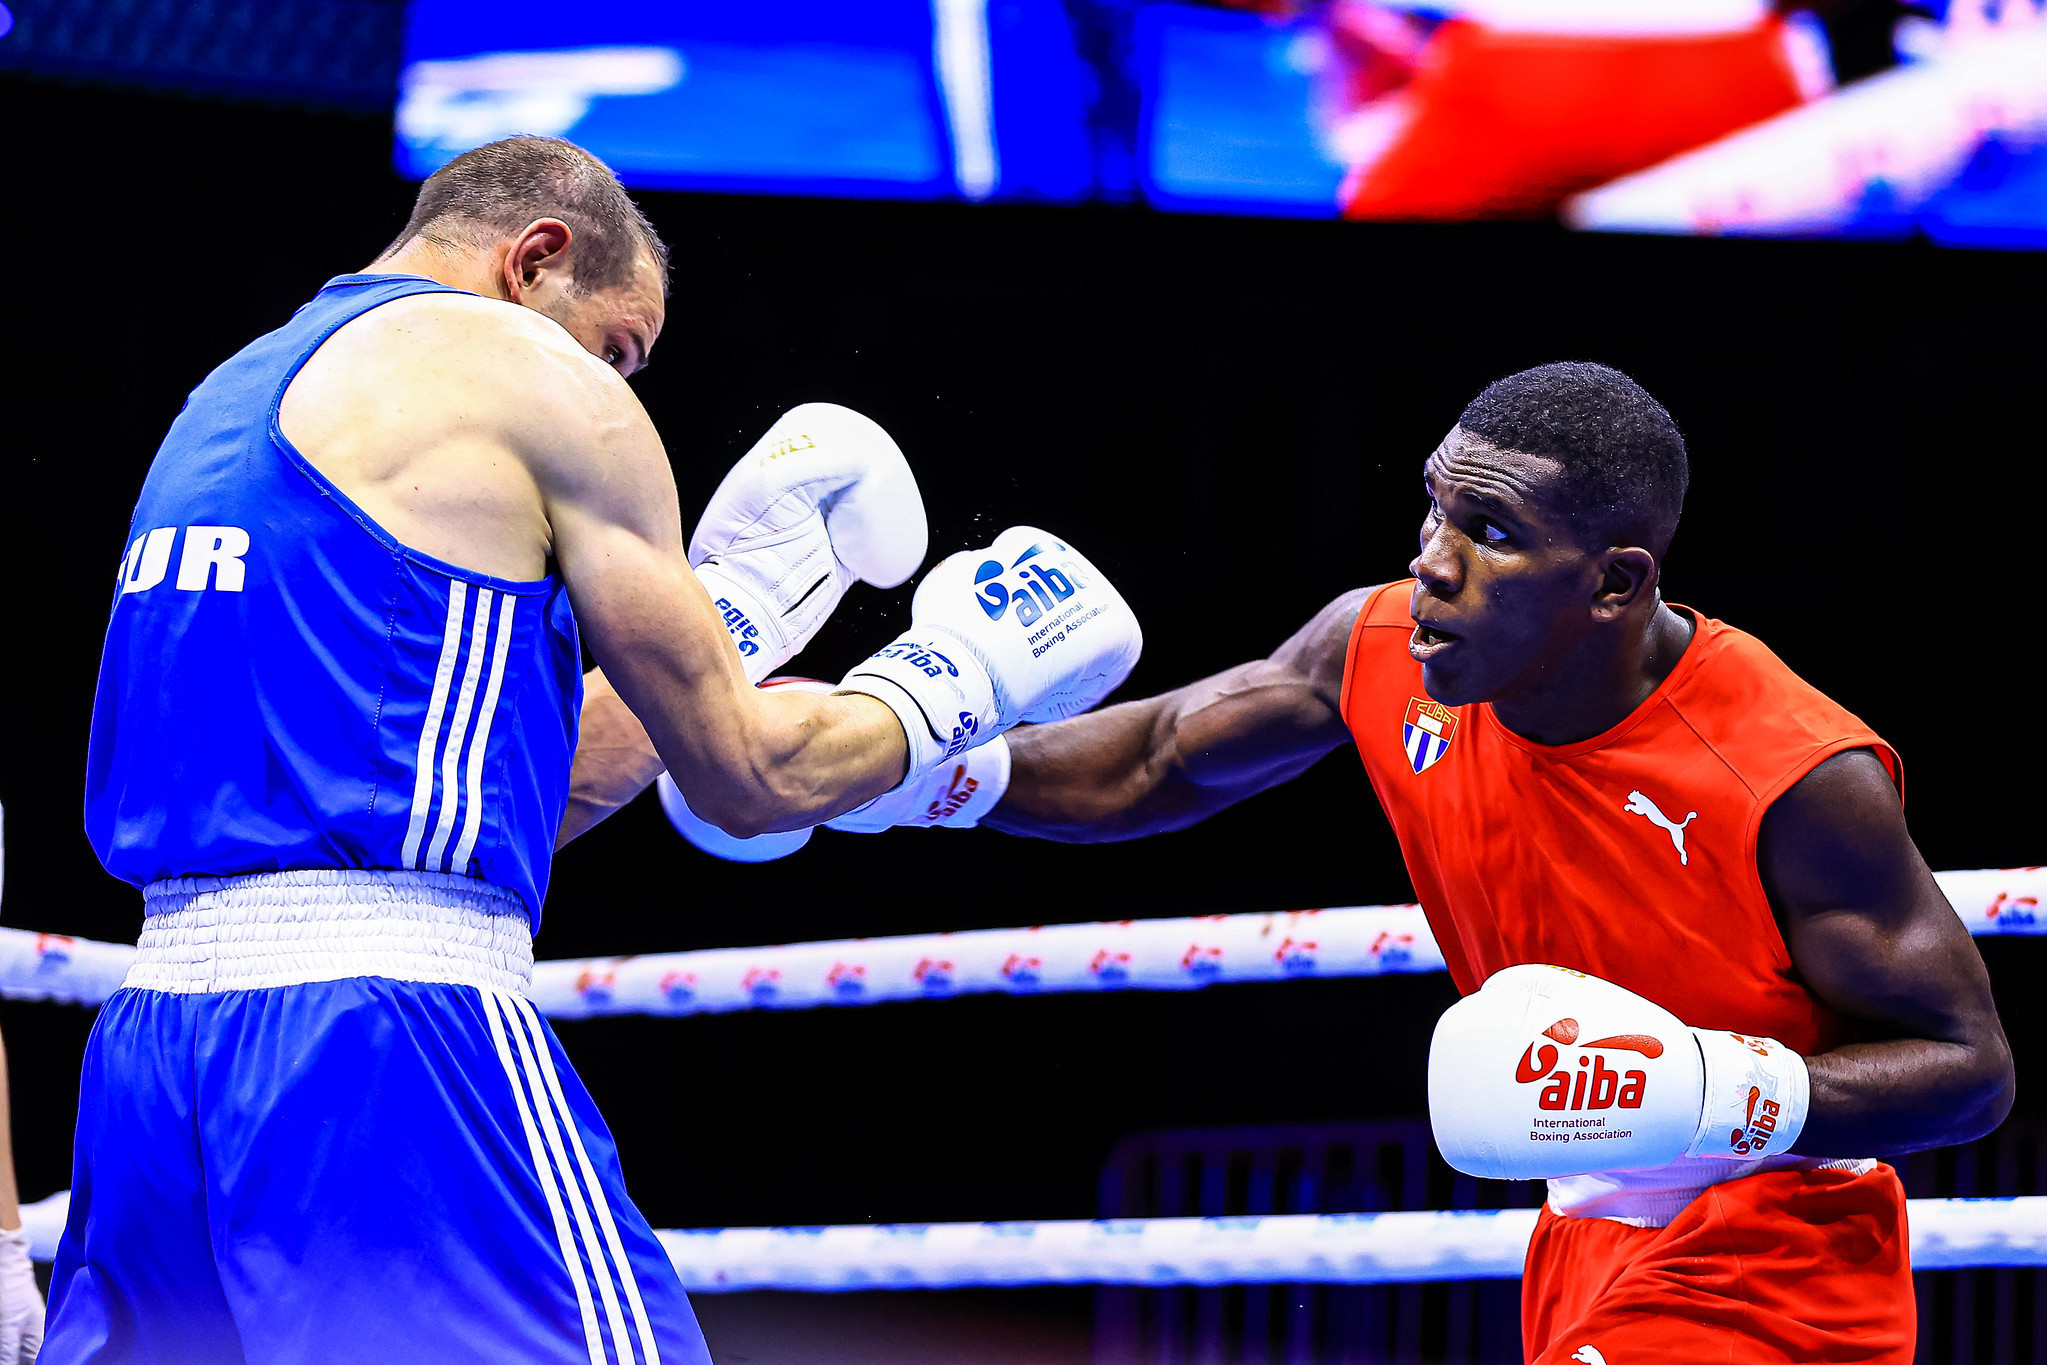 Cuban Yoenlis Hernandez Martinez is through to the next round after beating Turkish boxer Birol Aygun ©AIBA